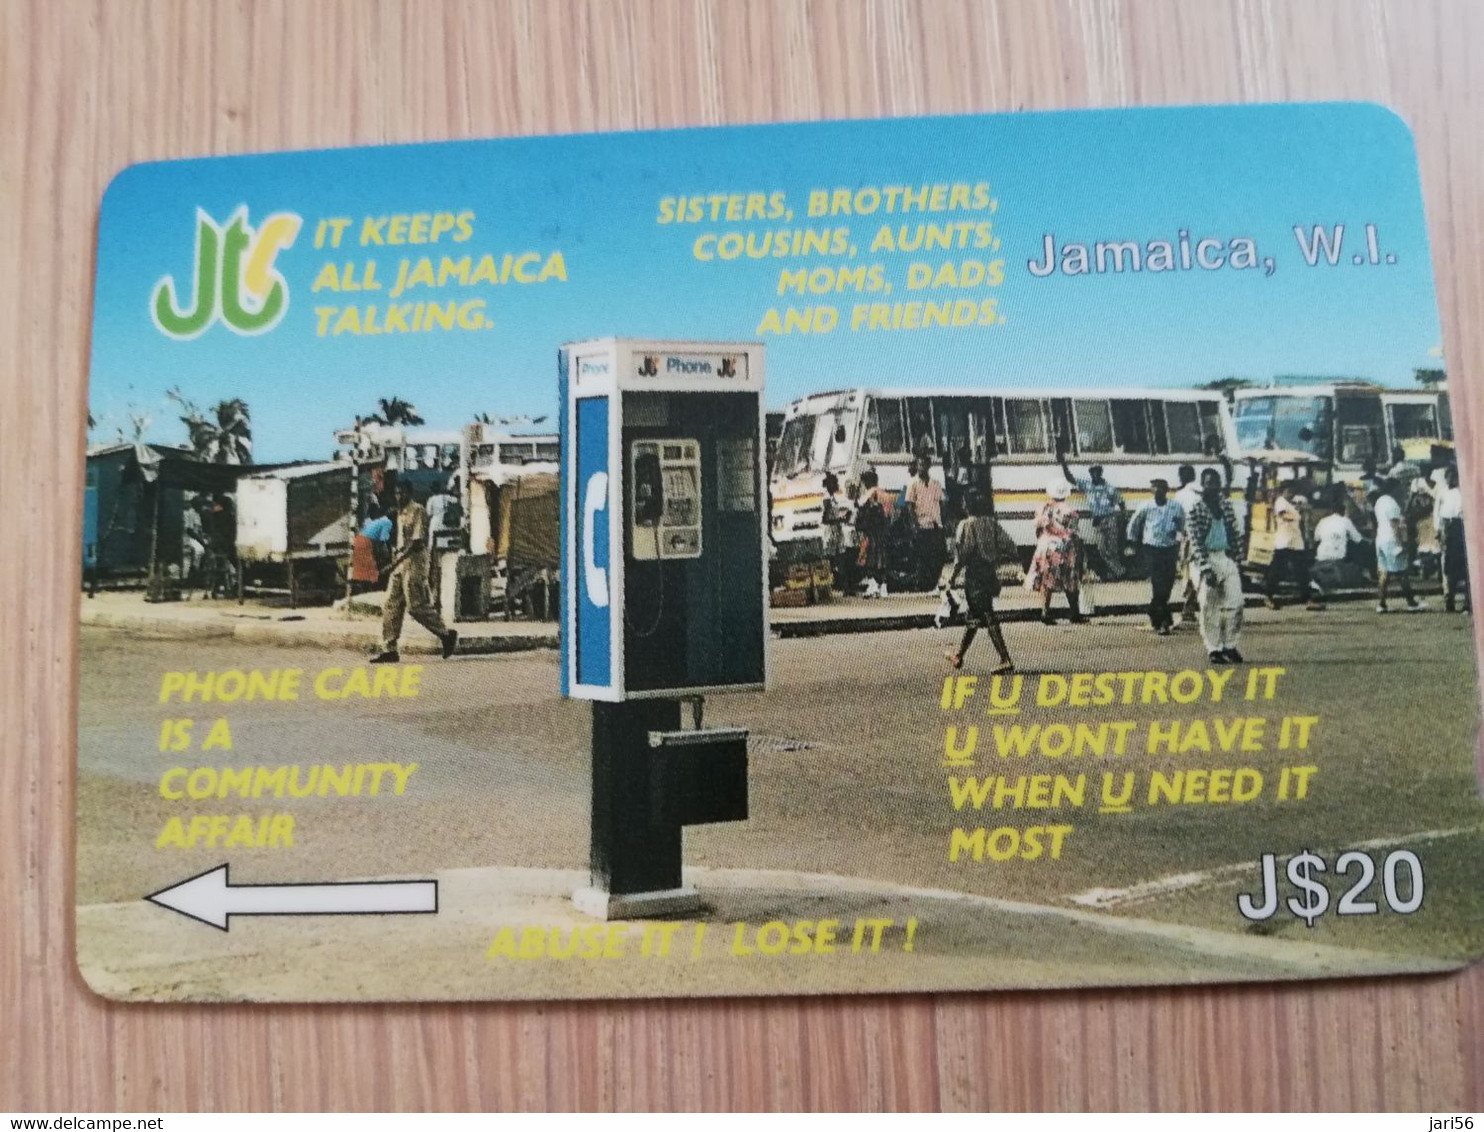 JAMAICA  J$20-  GPT CARD   KEEPS JAMAICA TALKING CONTROL NR: 14JAMD   Fine Used Card  **3234** - Jamaica